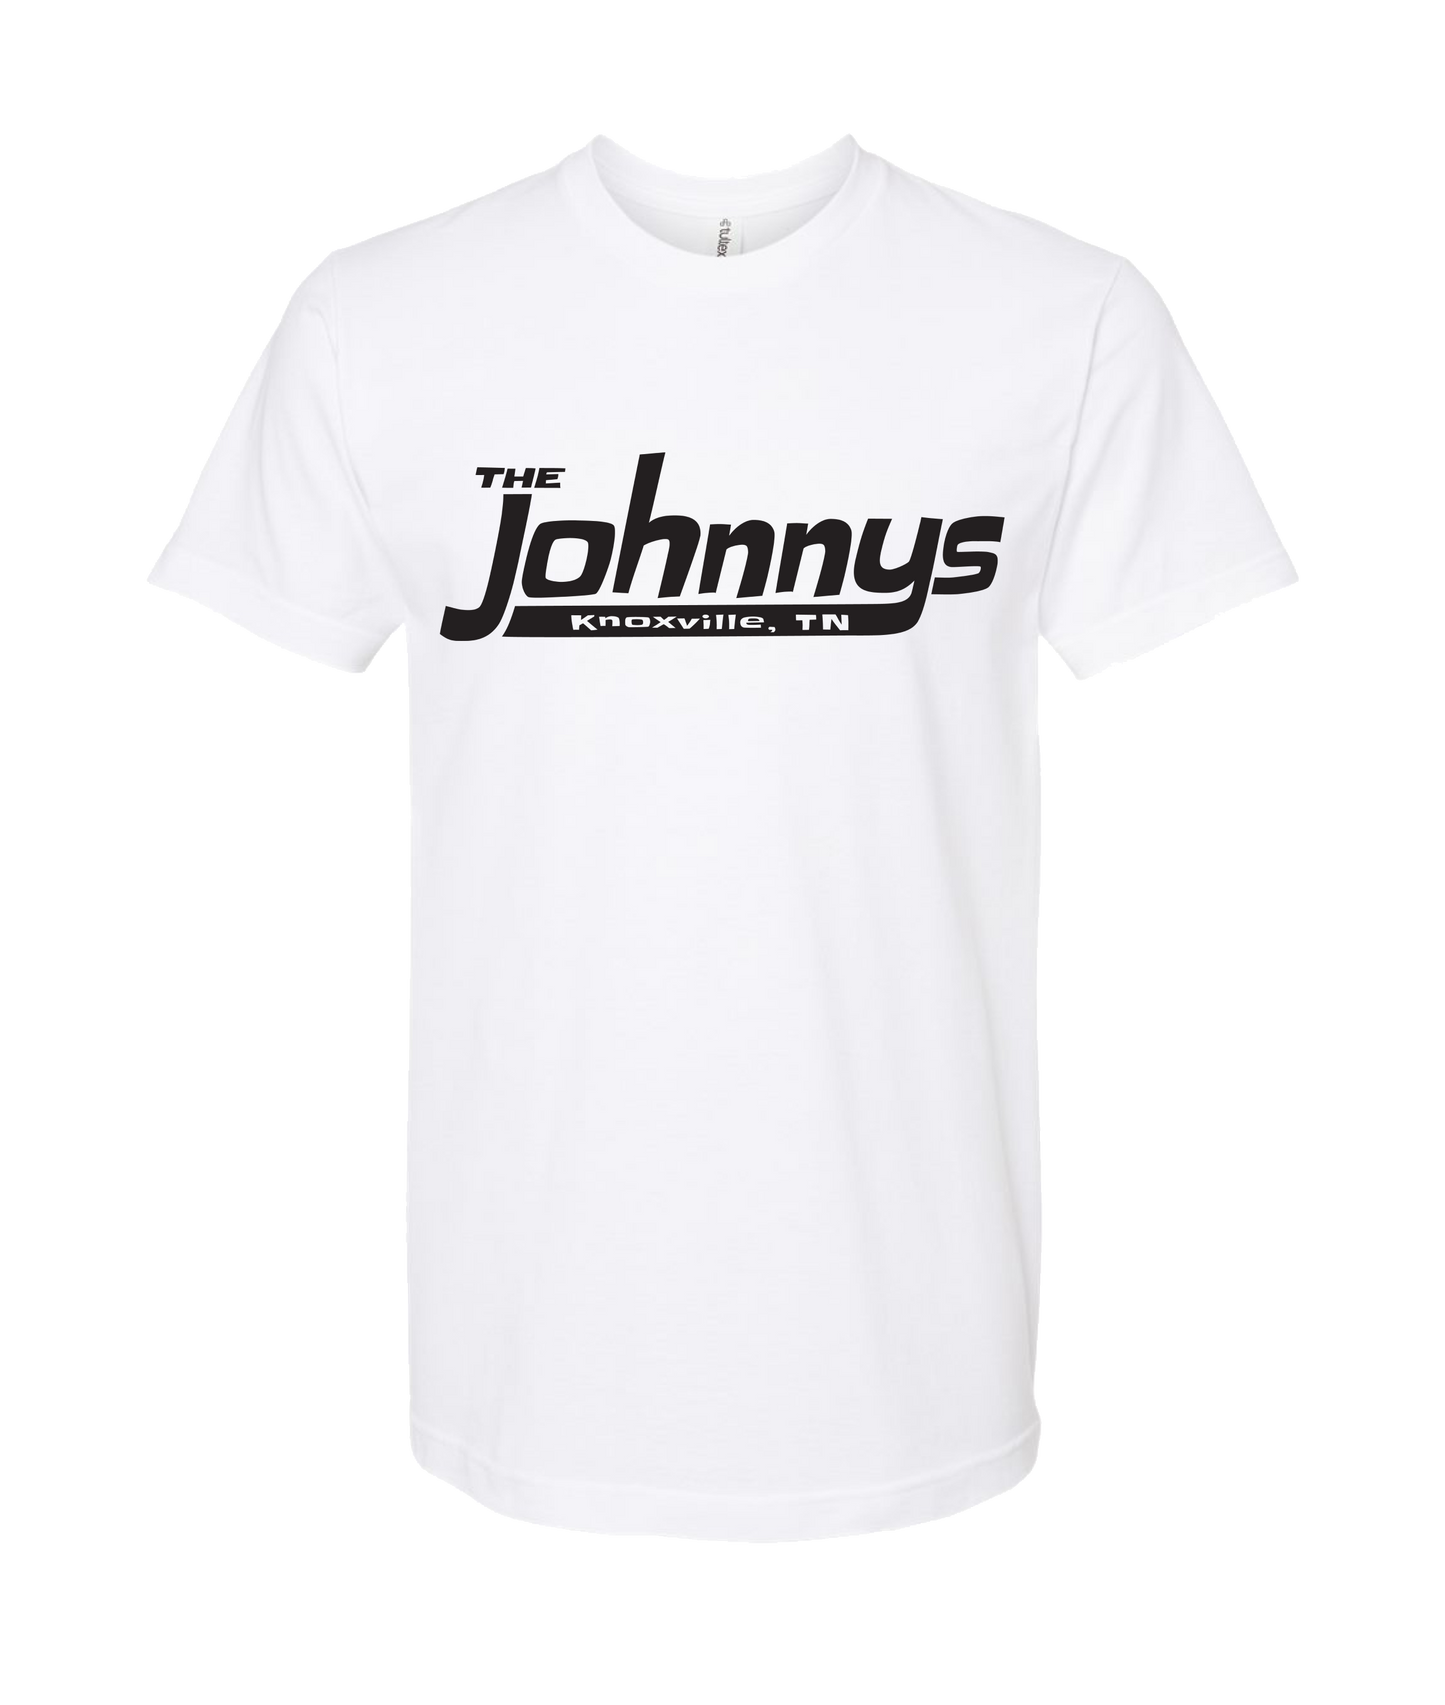 The Johnnys - LOGO 2 - White T Shirt